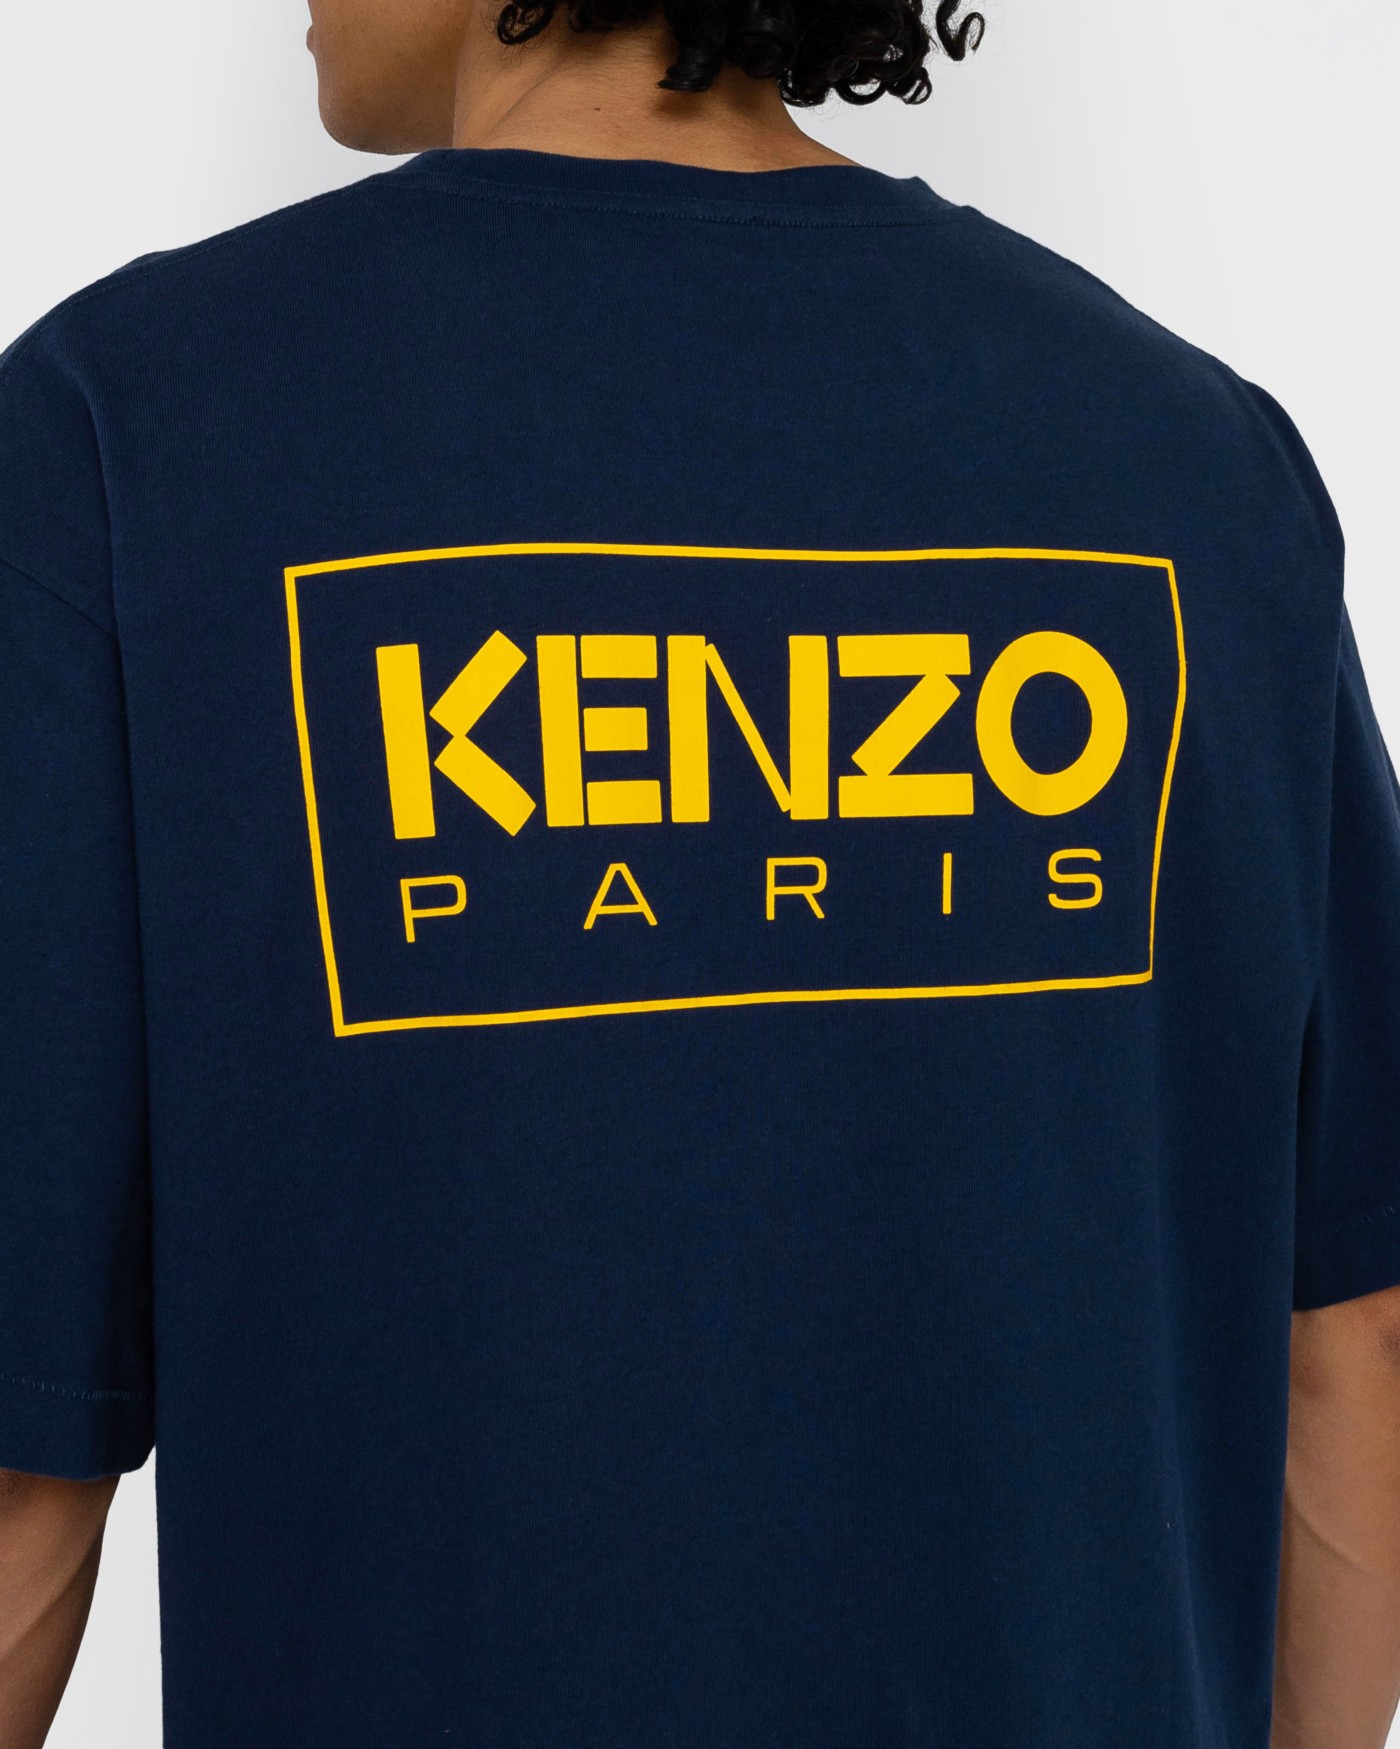 Kenzo Camiseta Kenzo Paris Oversized Azul Marino